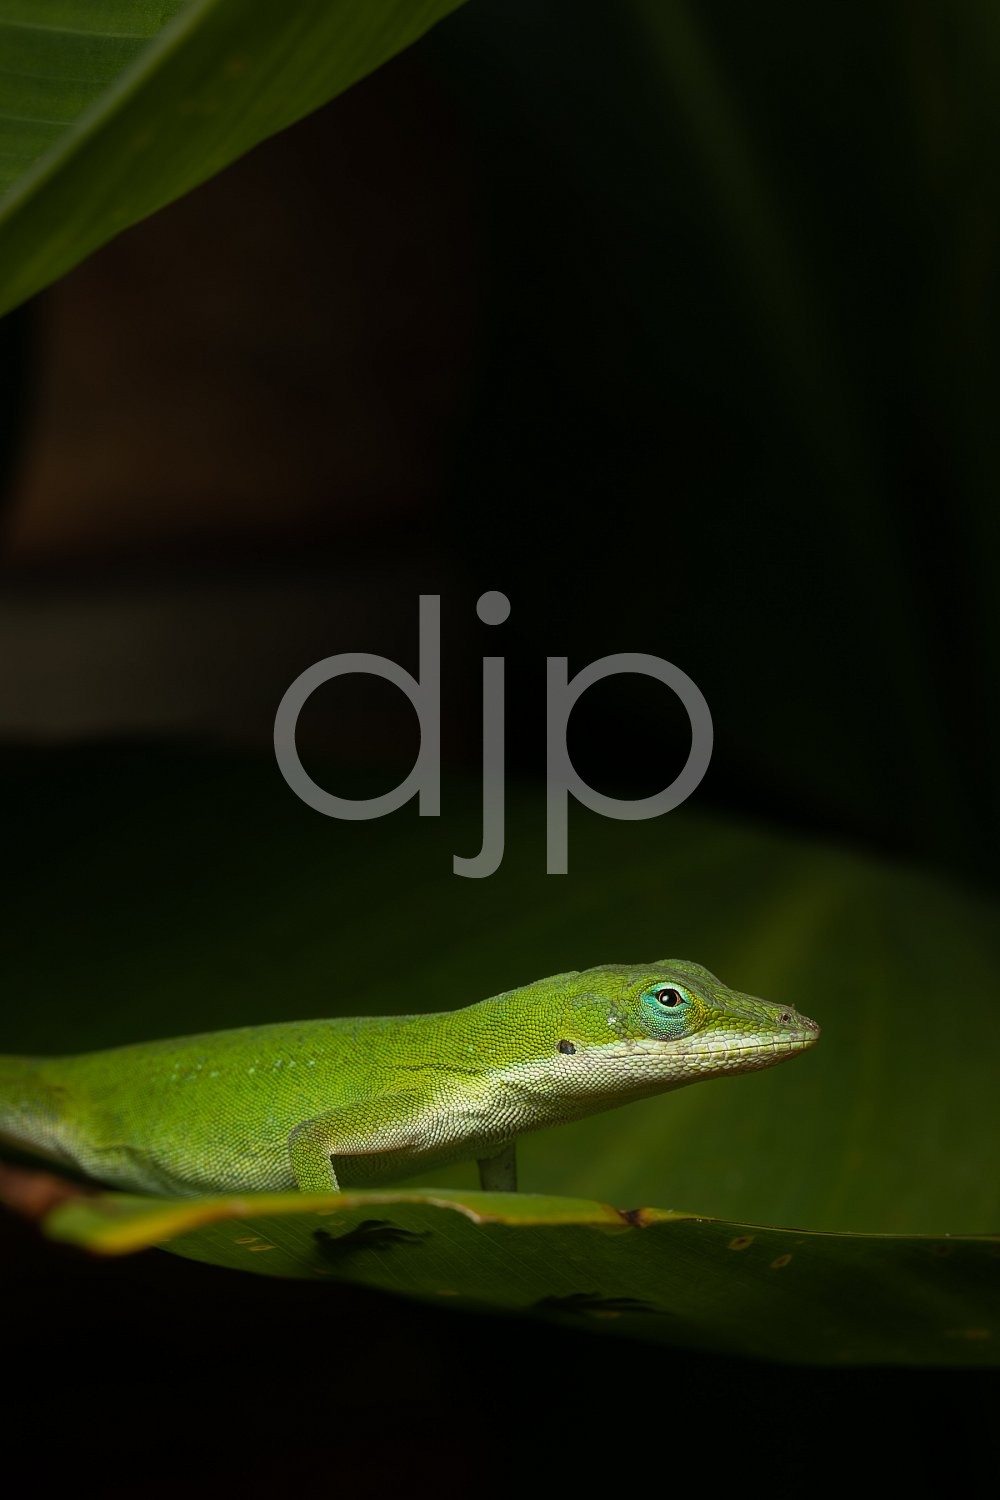 Sugar Land, djonesphoto, excursions with djp, green, lizard, macro, personal, quarantine, white, D Jones Photography